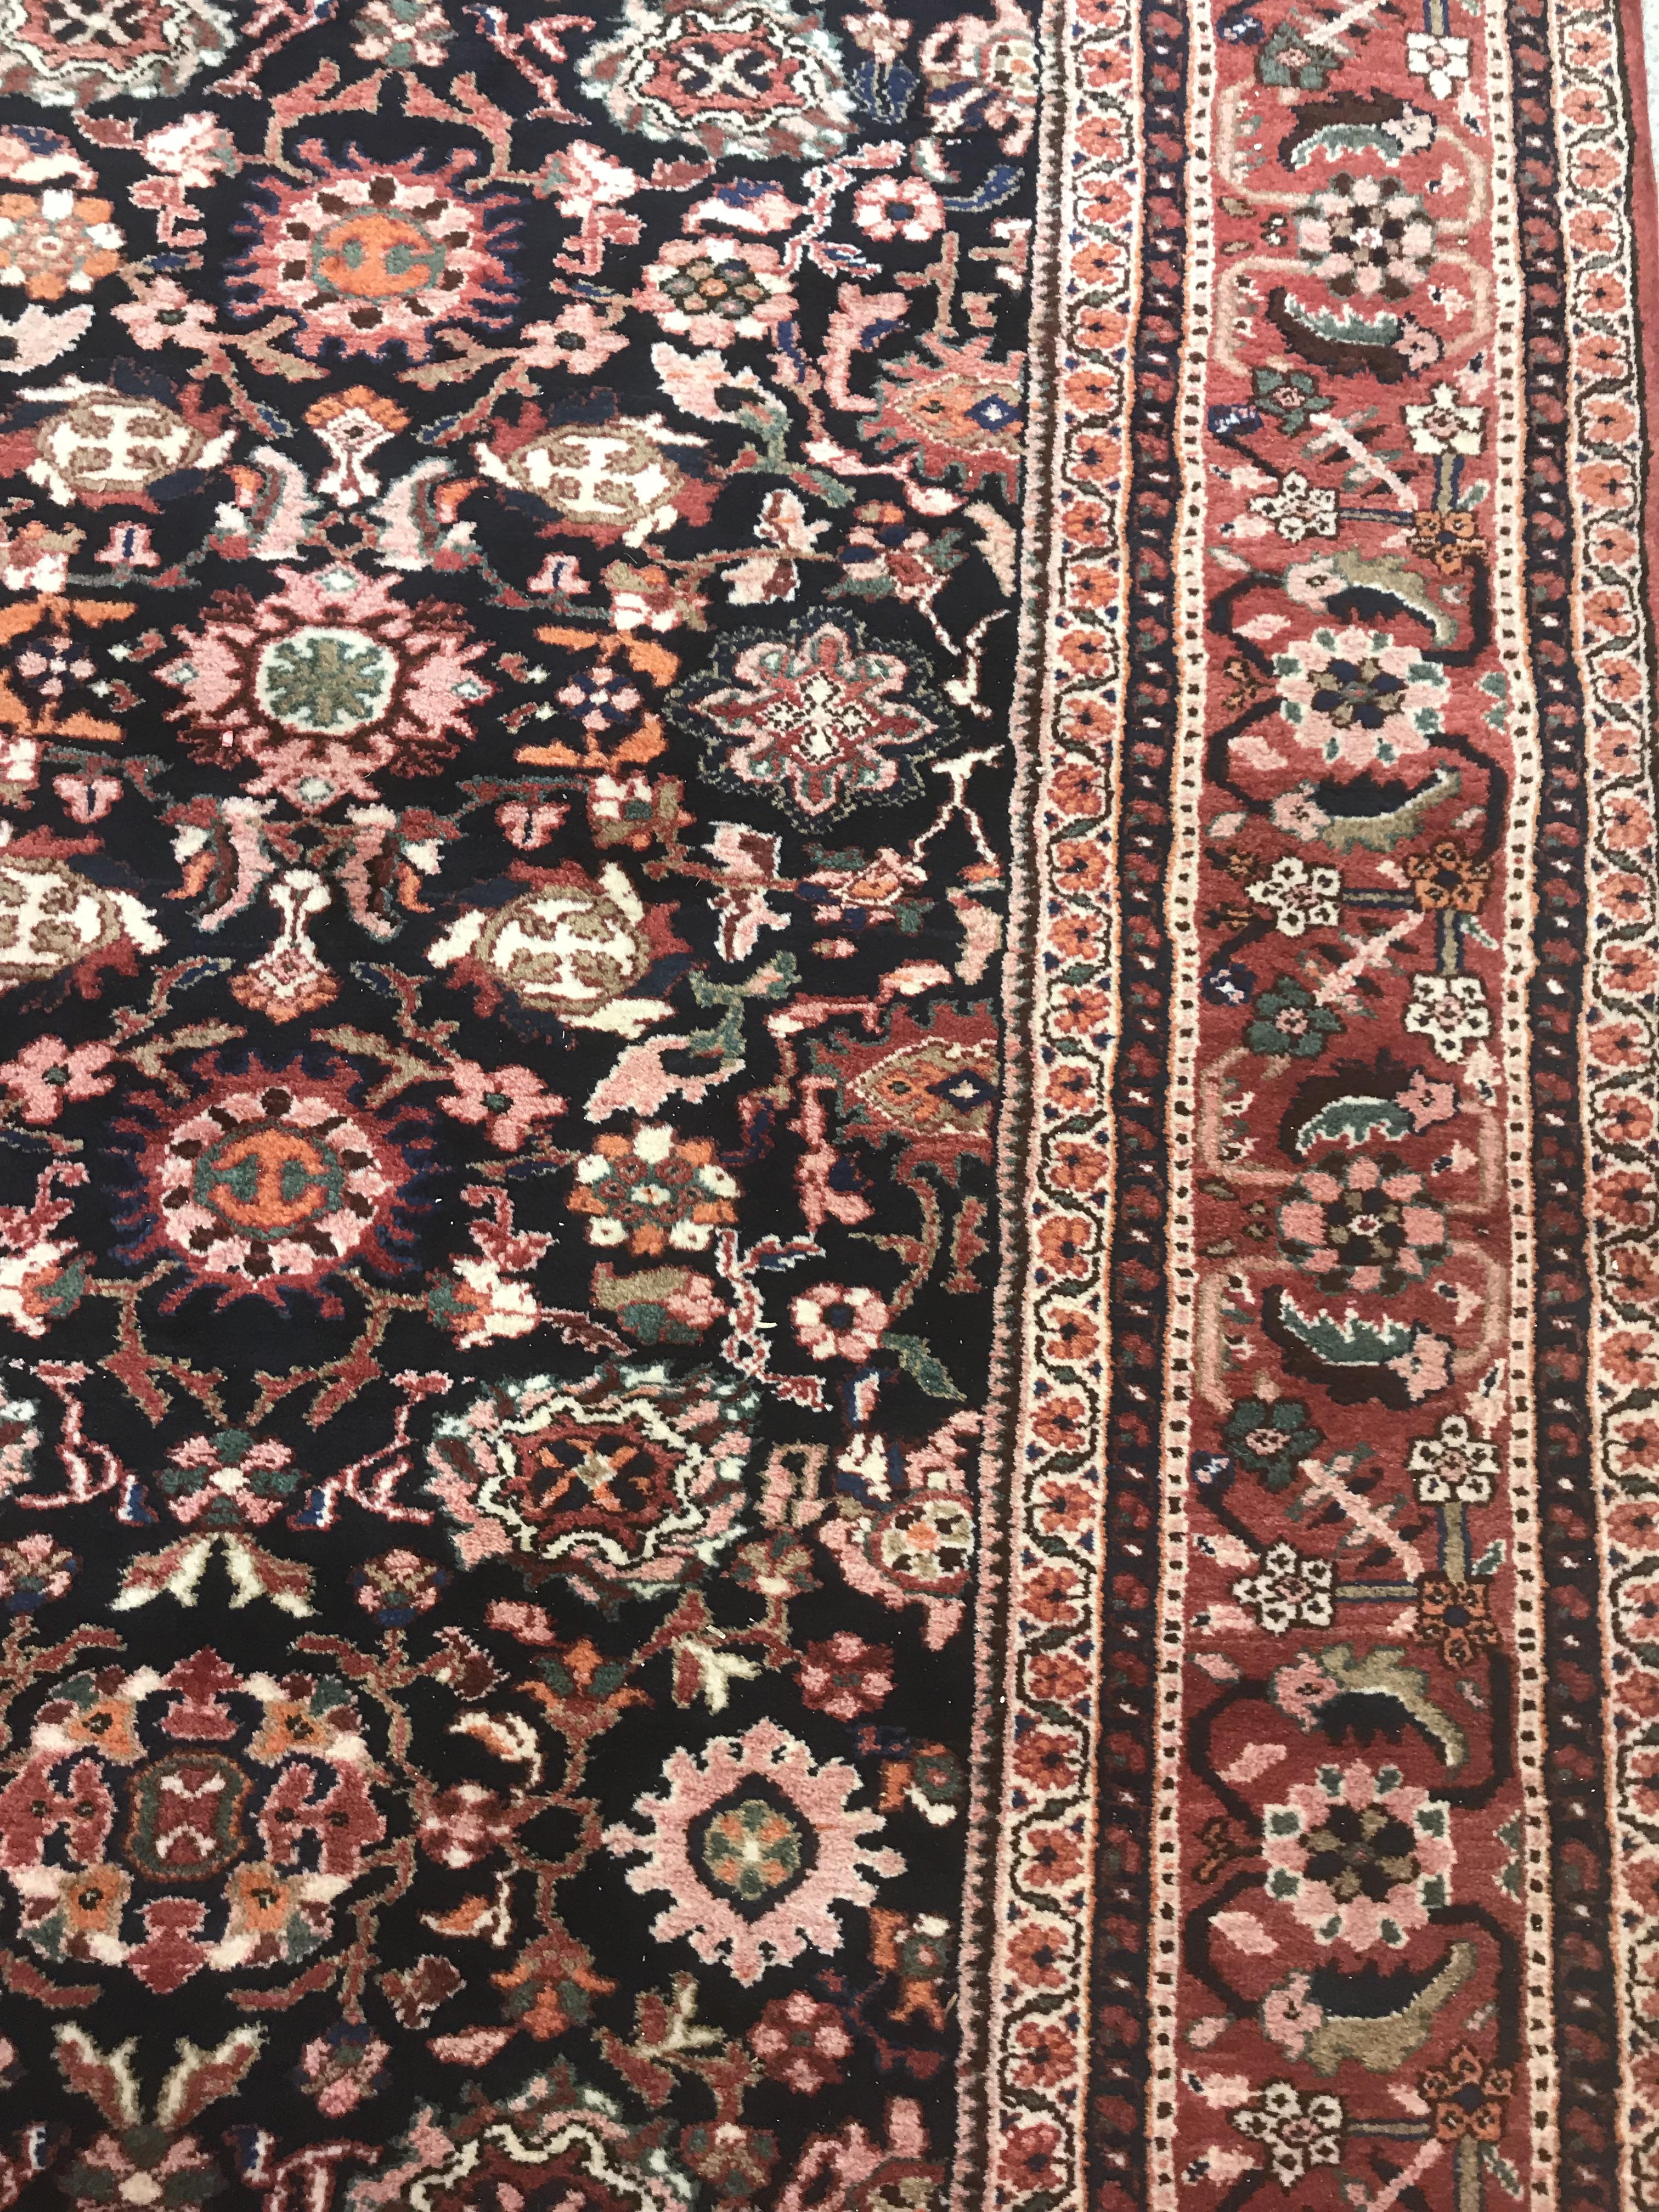 A 20th Century Afghan Kazak carpet, - Image 13 of 36